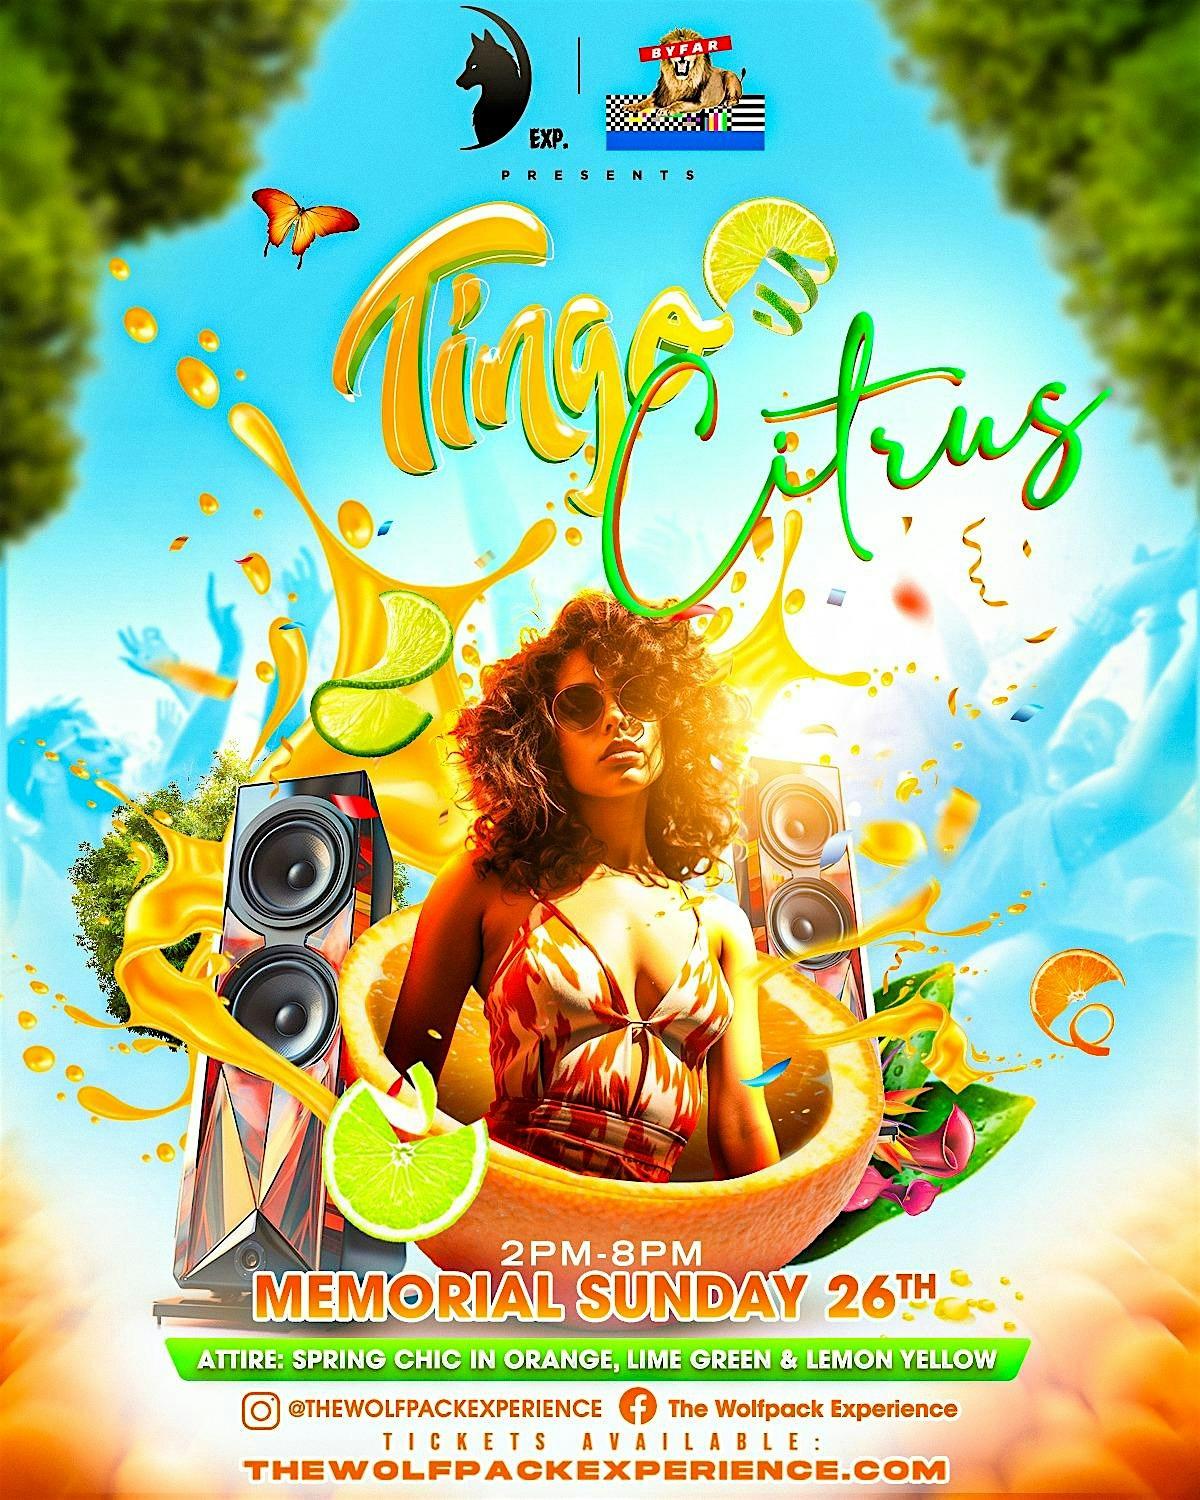 Tingo Citrus: Event 2  flyer or graphic.